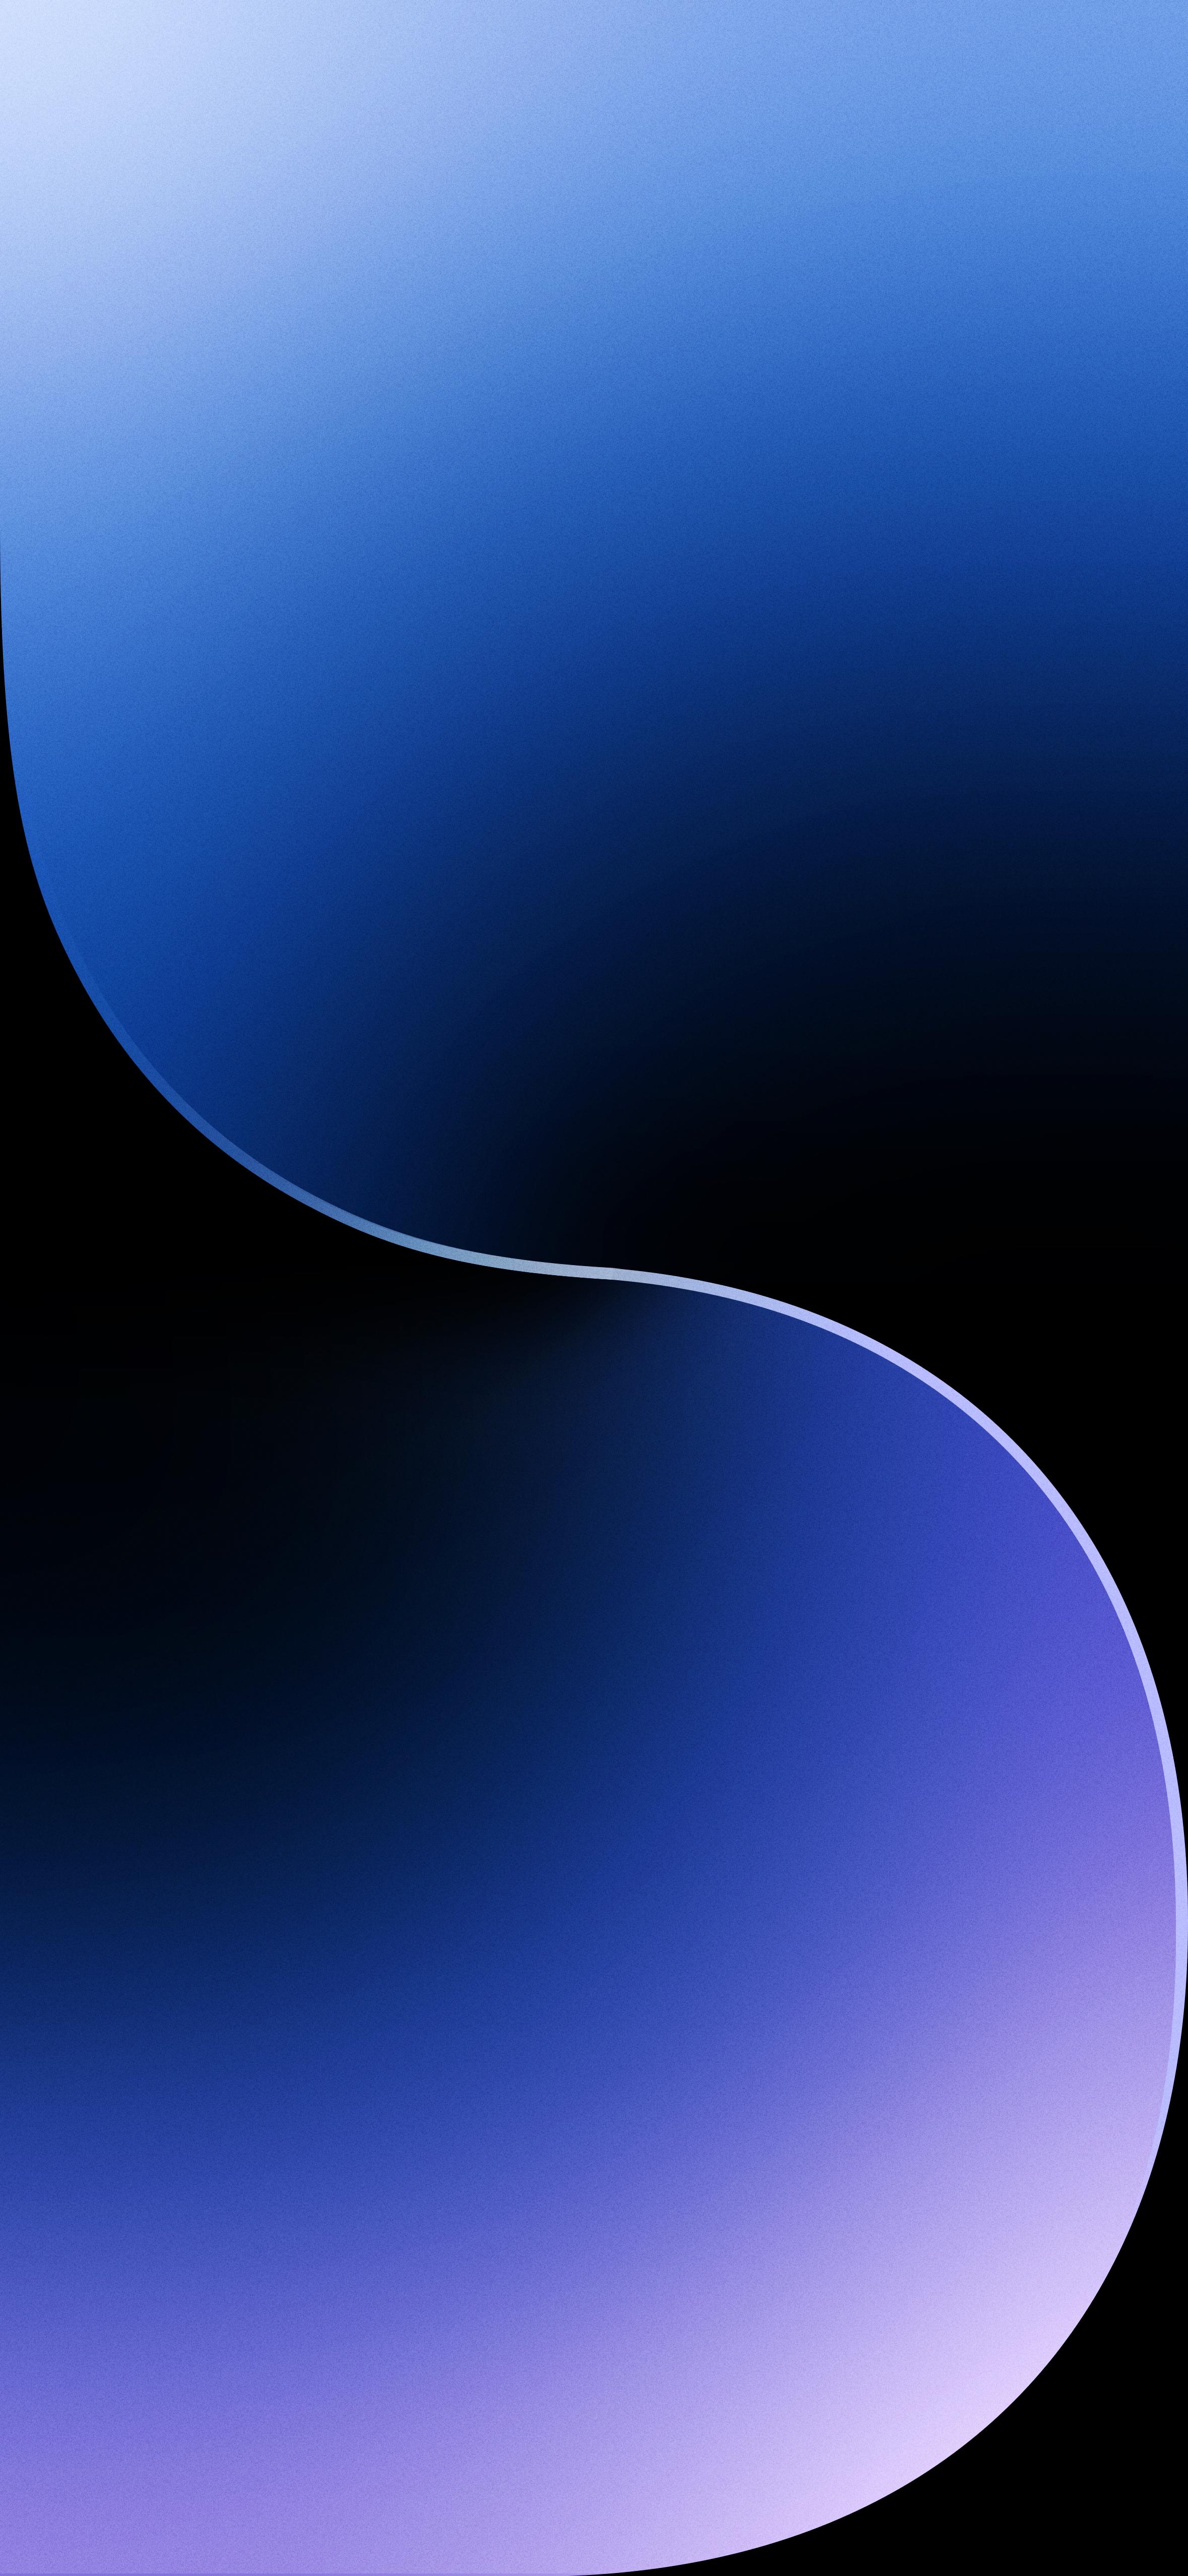 iPhone Pro Concept Wallpaper Ocean Blue Central